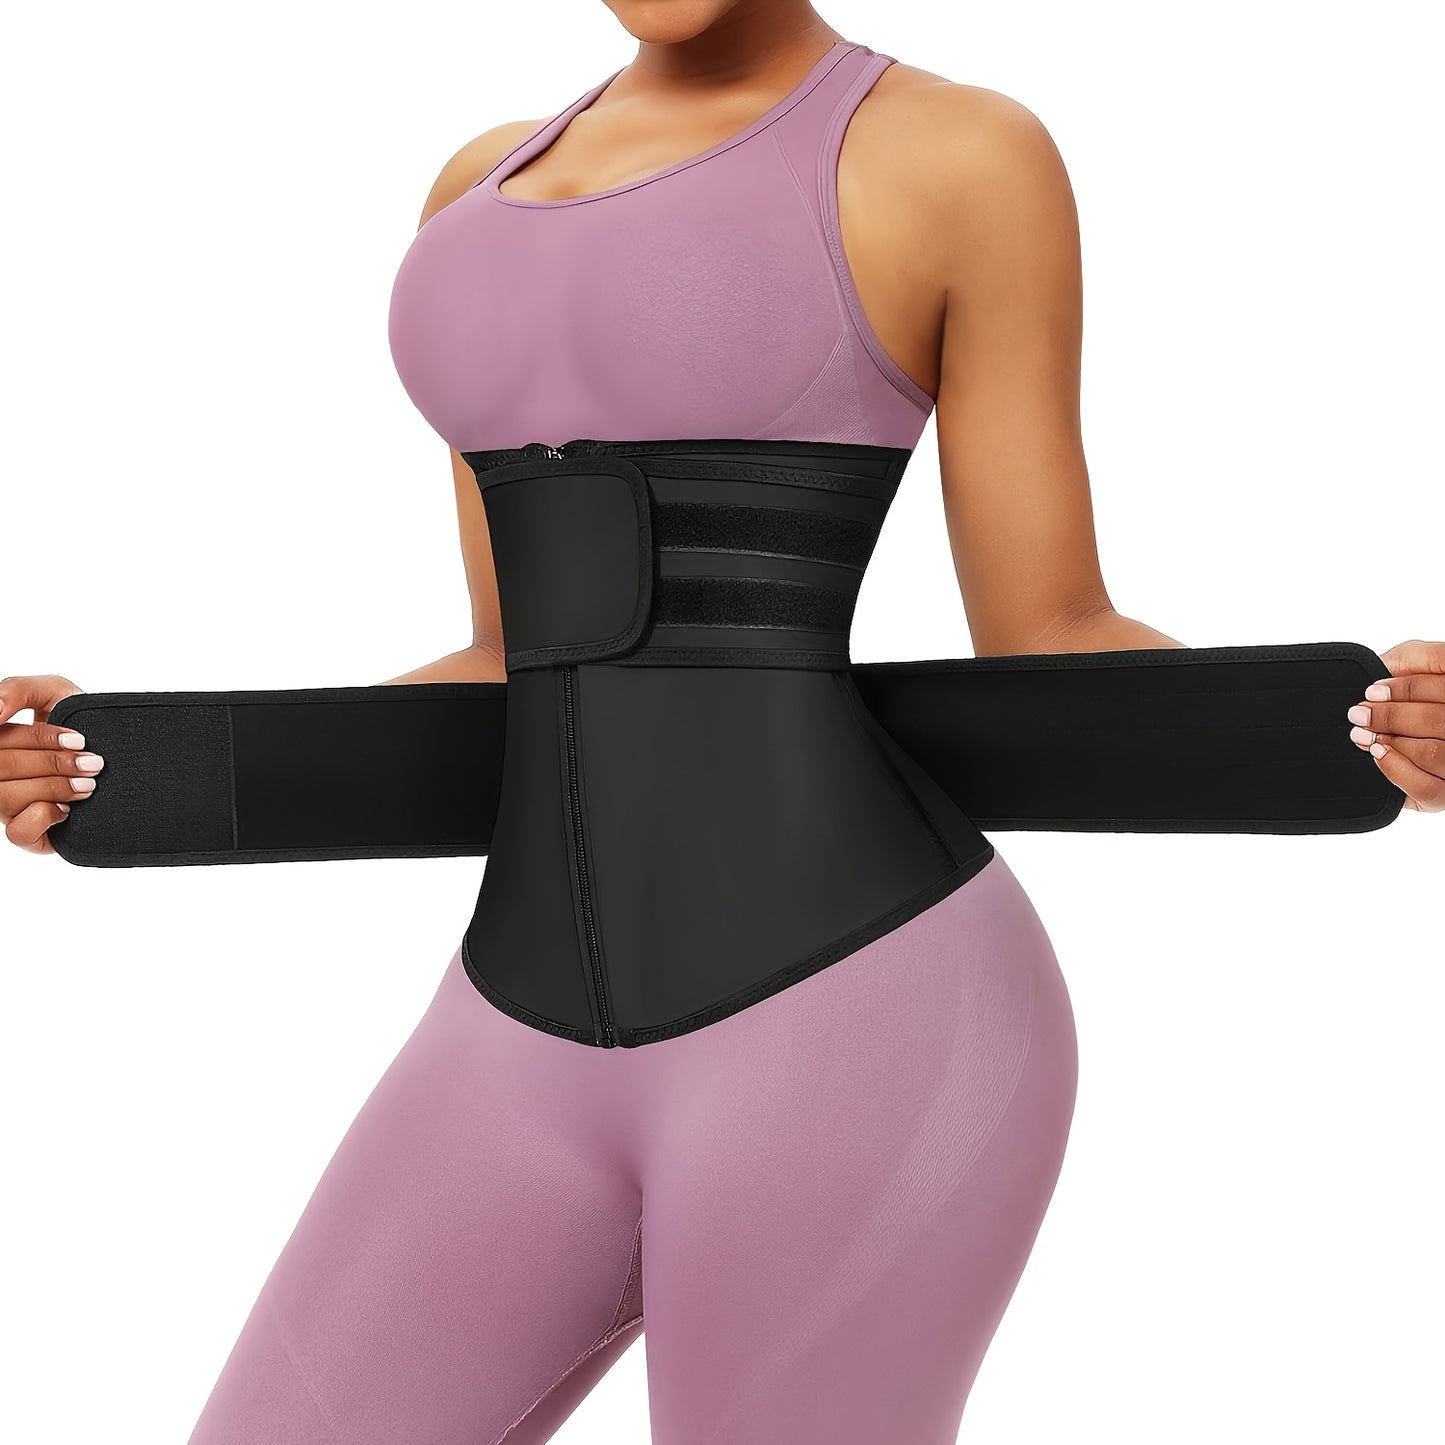 Order A Size Up, Breathable Neoprene Waist Trainer Trimmer Belt, Body Shapewear For Women